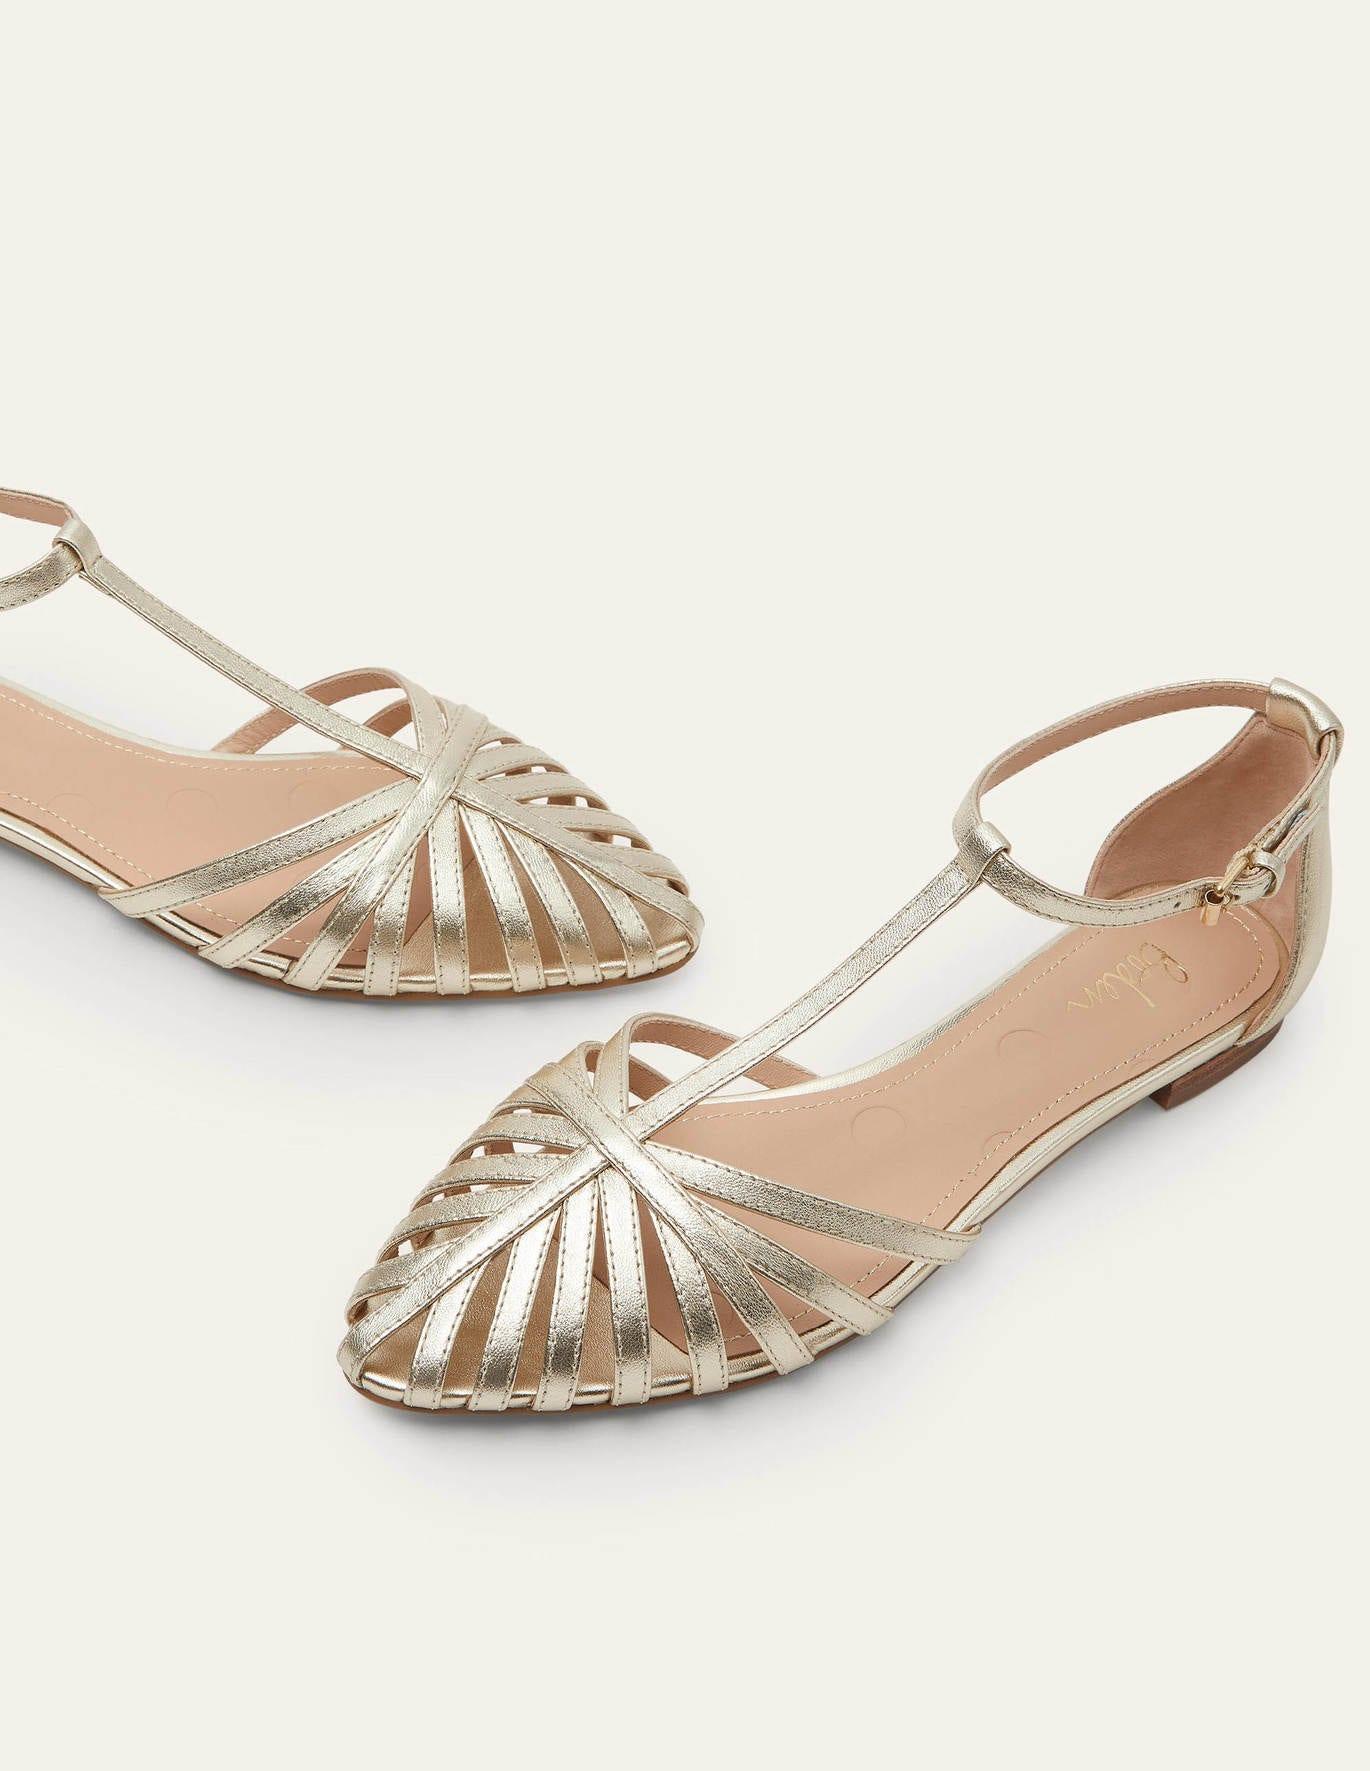 Boden Tess Cage Flat Sandals Pale Metallic | Lyst